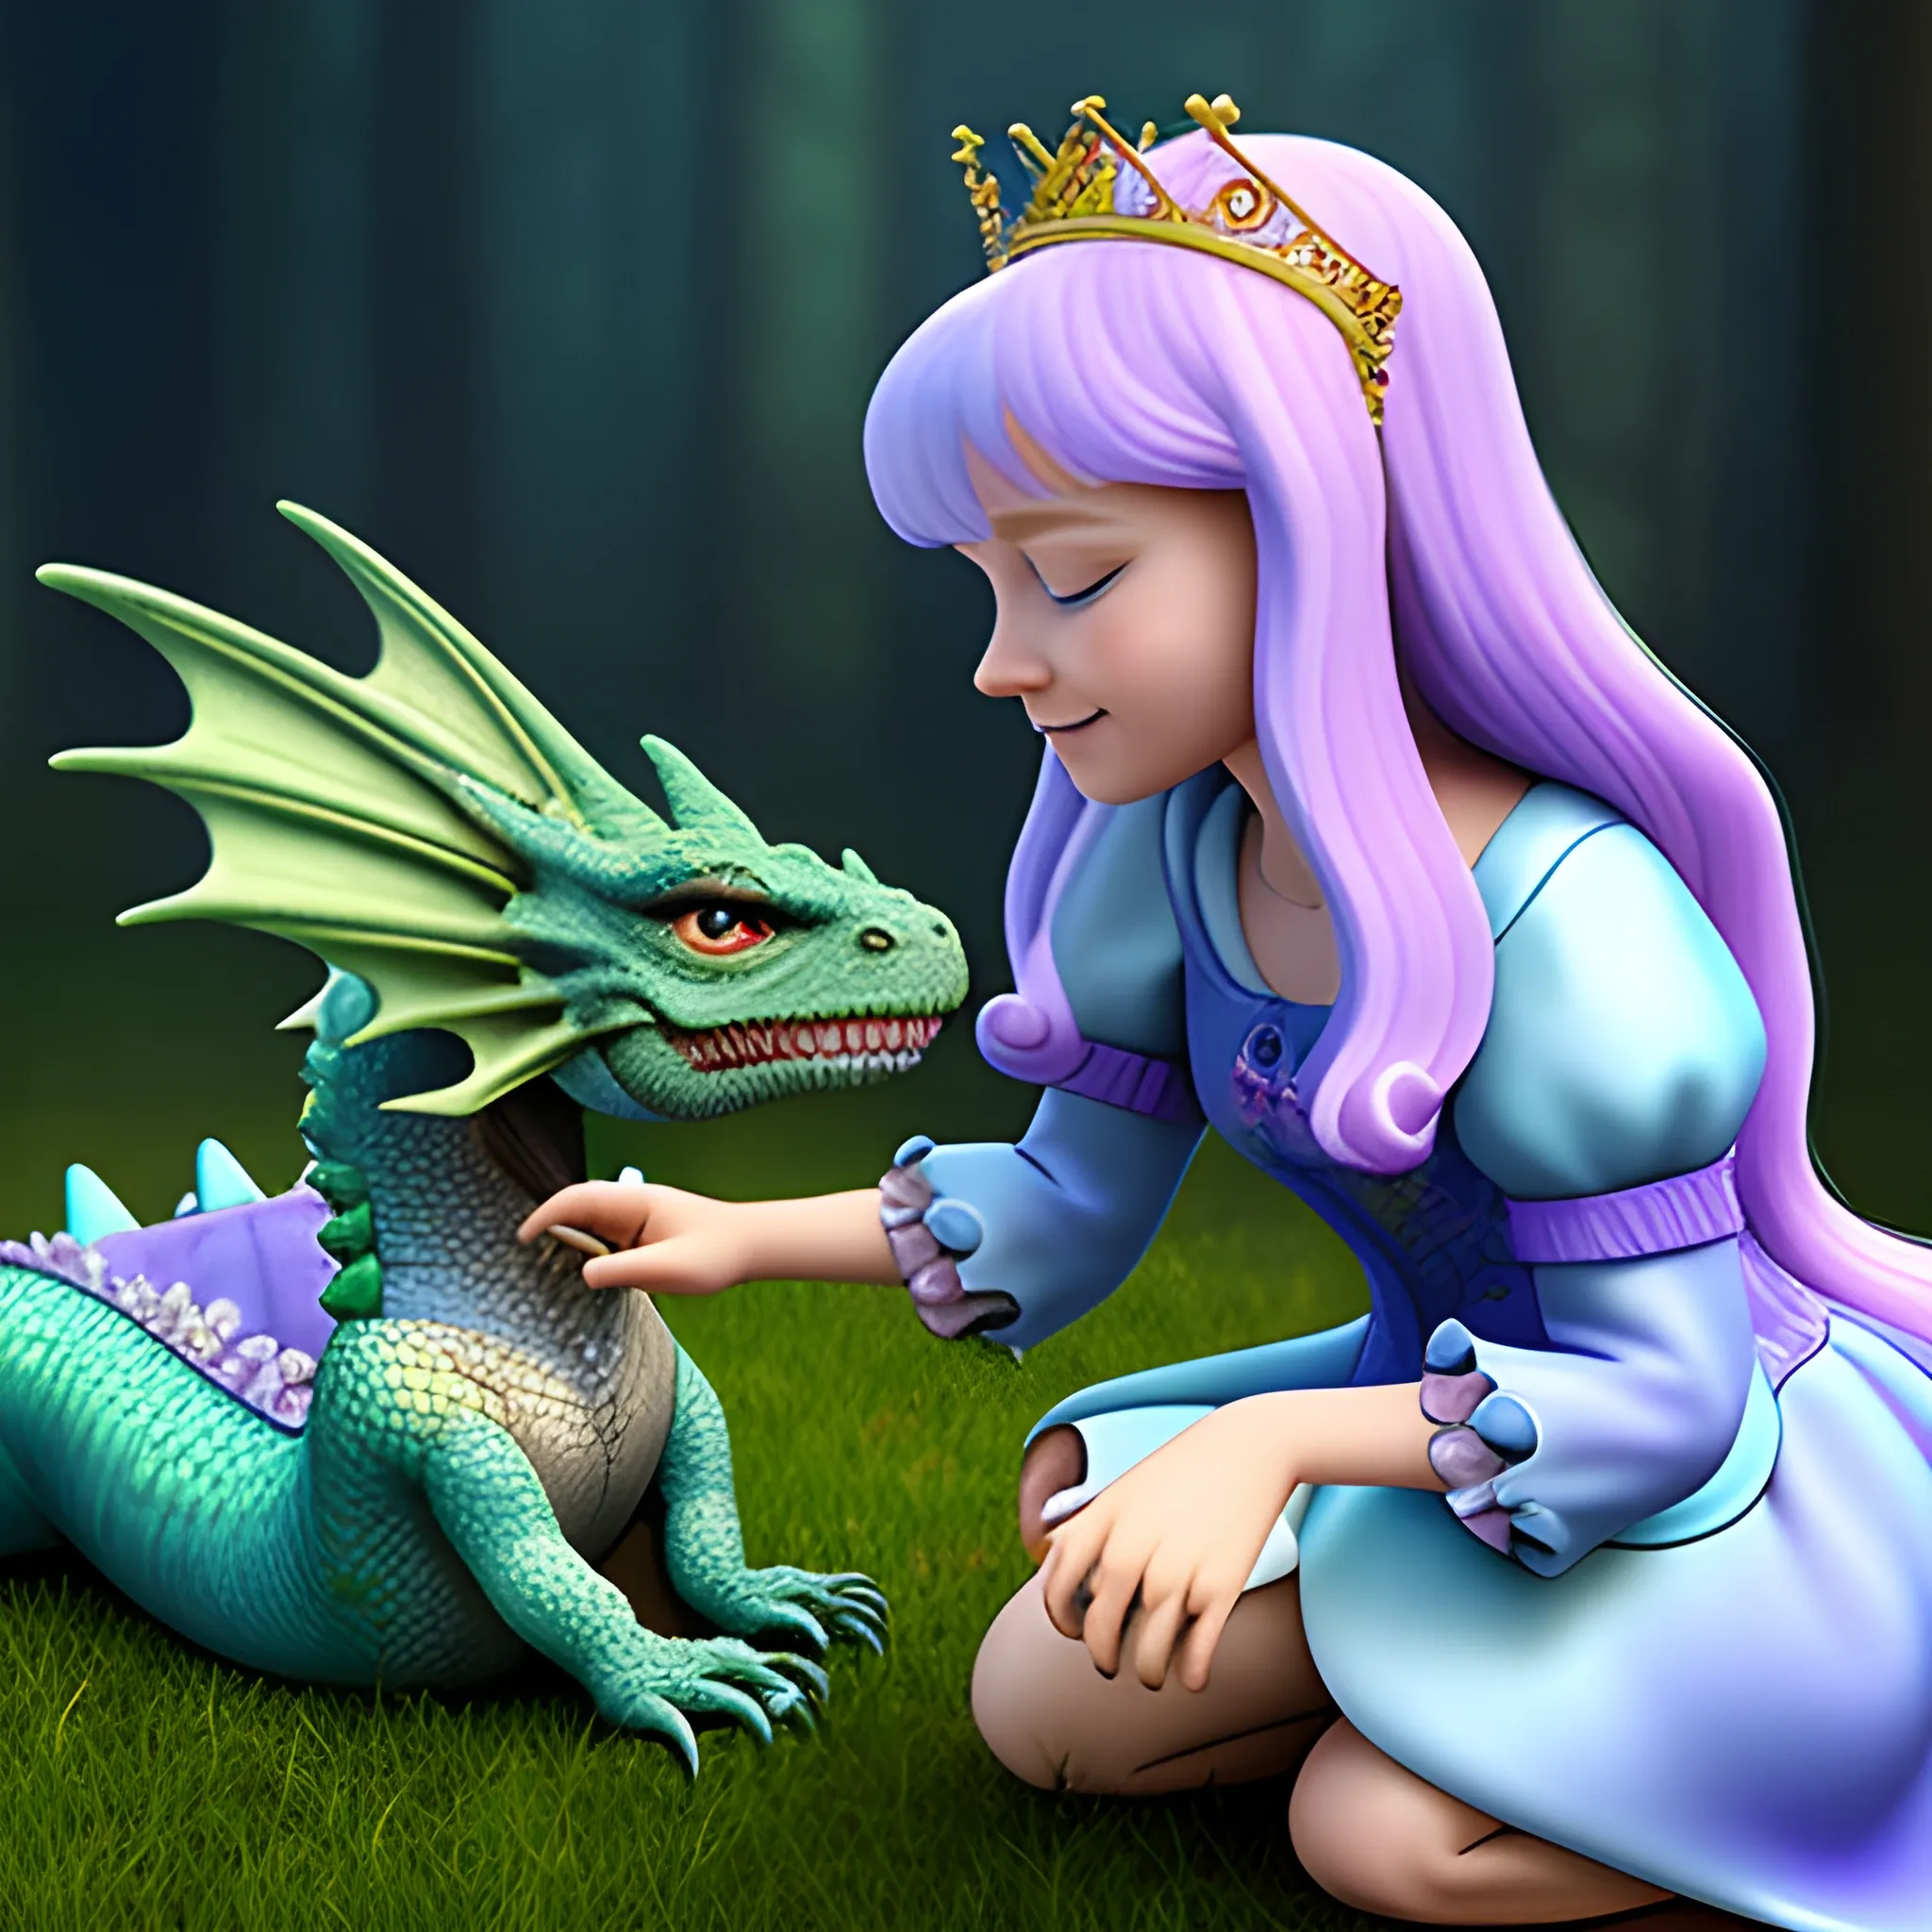 Realistic Princess petting her pet dragon, 3D, 3D, Trippy